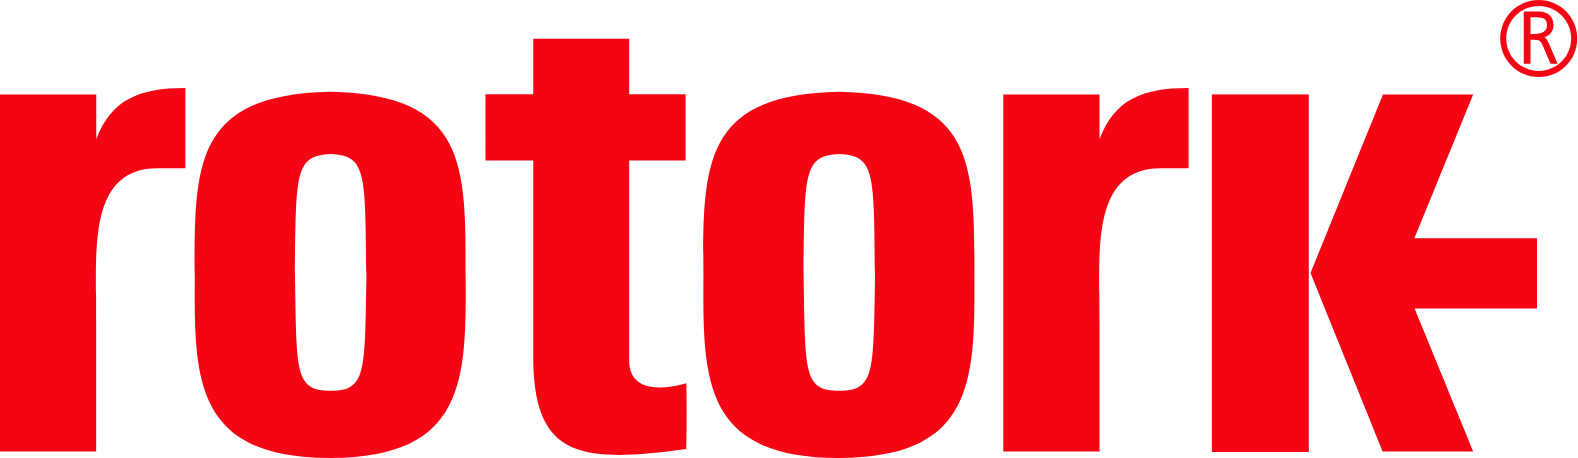 Rotork logo large (transparent PNG)